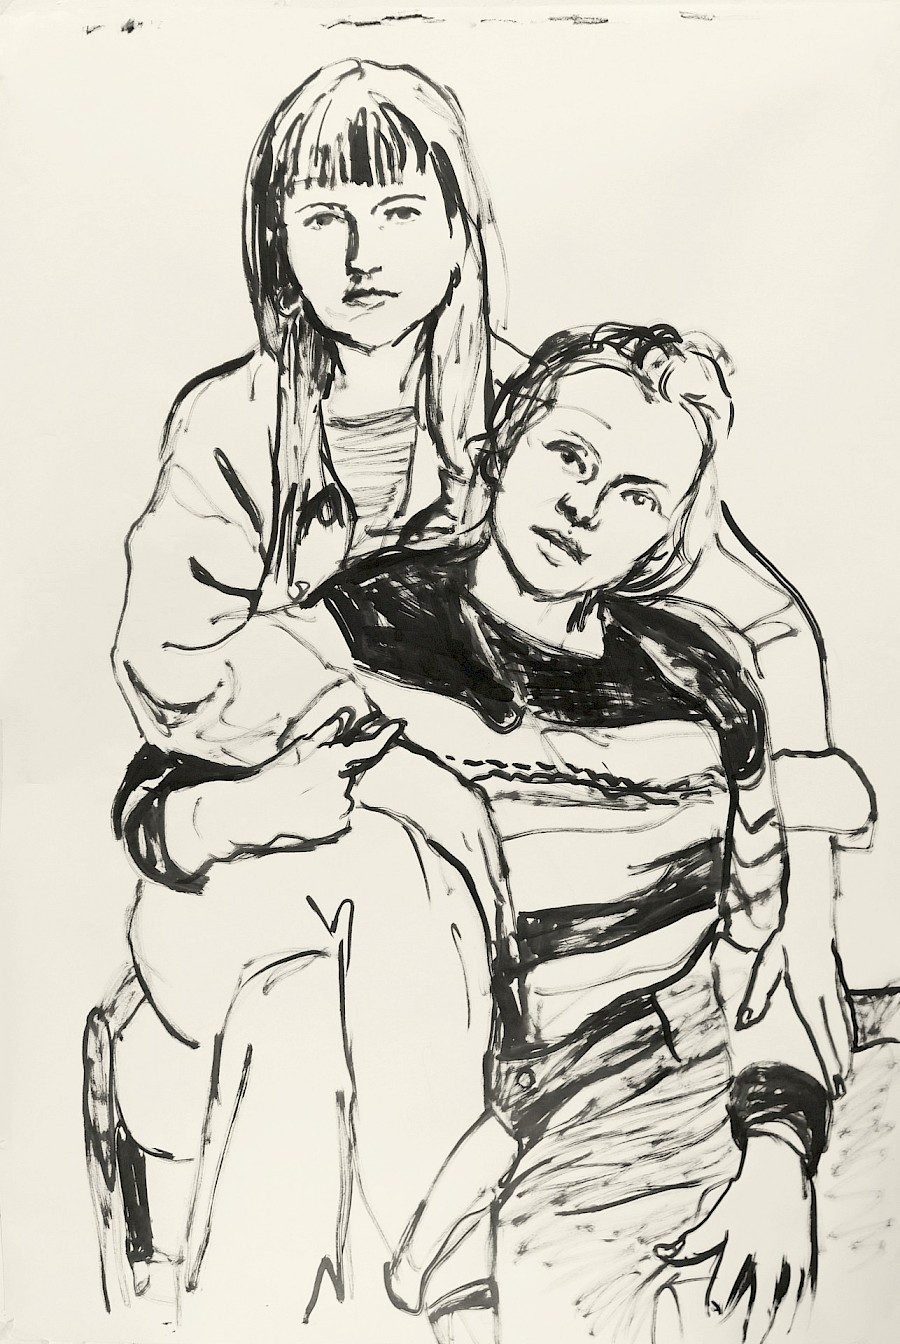 Alicja & Pia
150 x 104 cm
Tusche auf Papier
2021